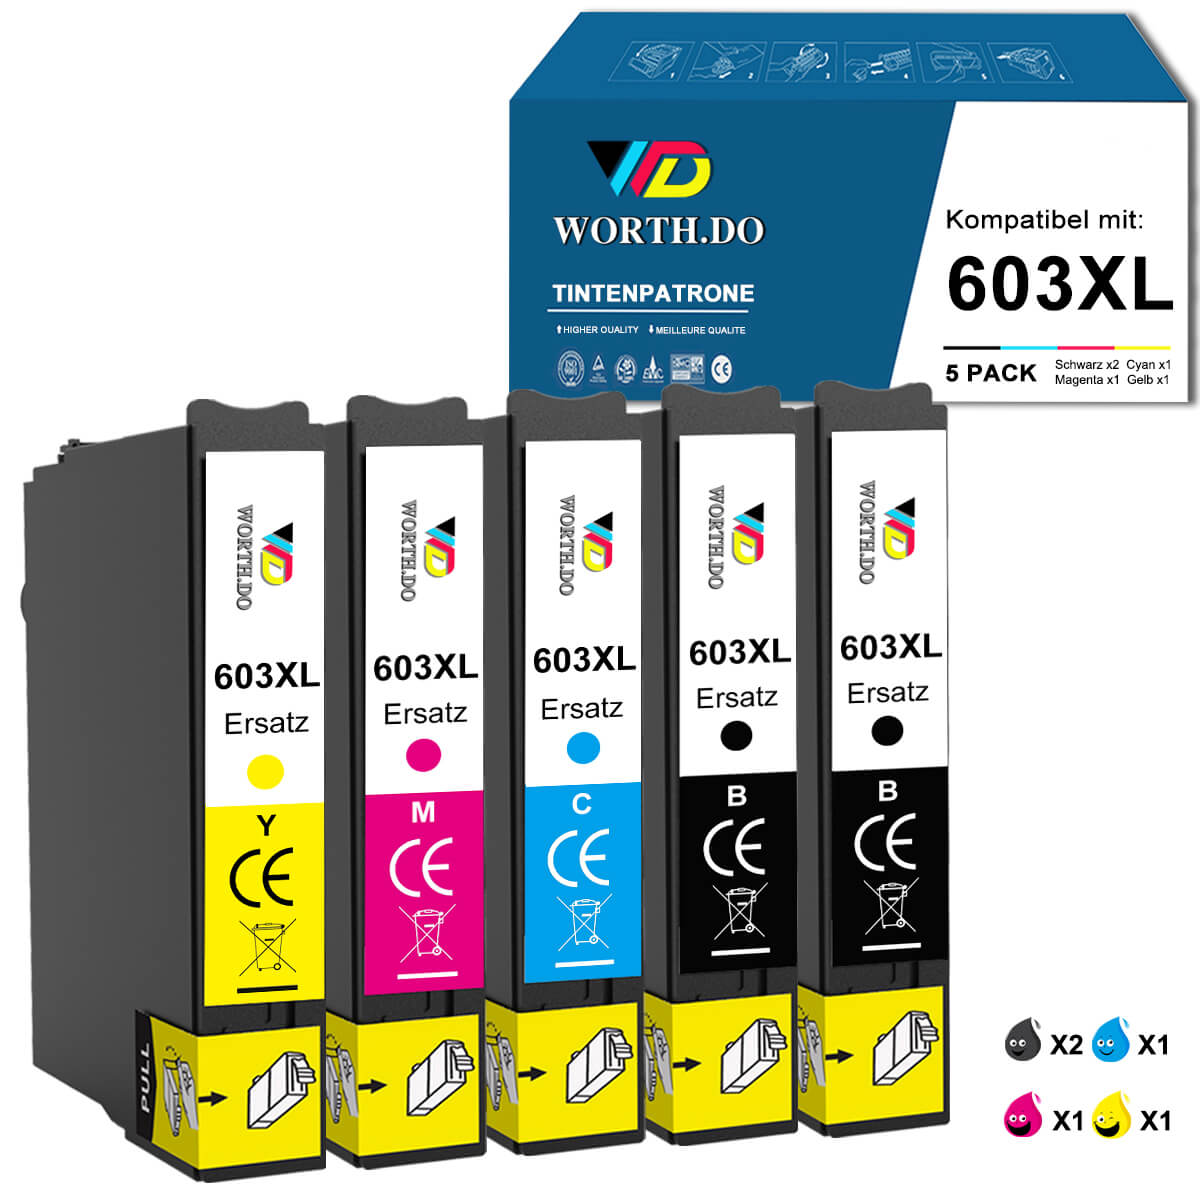       worthdo-kompatible-tintenpatronen-feur-epson-603xl-5pack